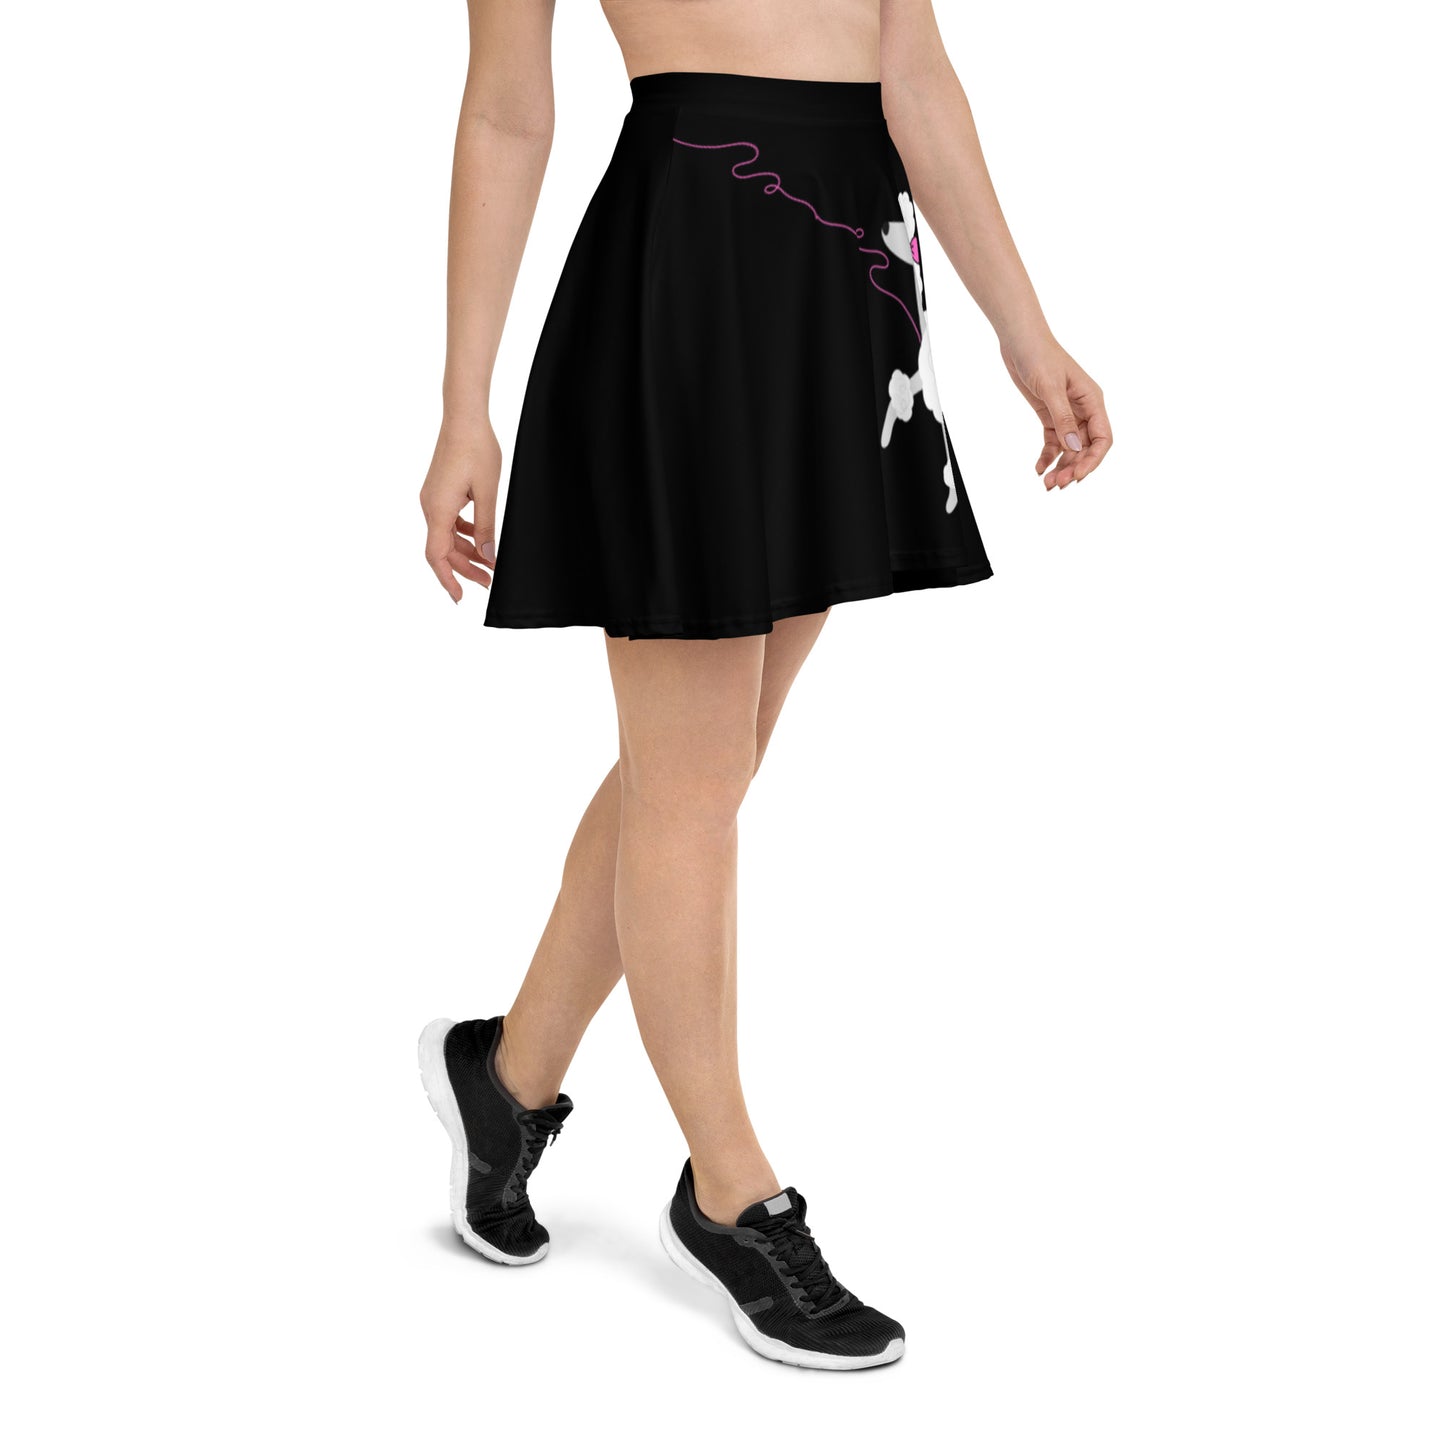 Retro Vintage Black Poodle Skater Skirt  50s Style